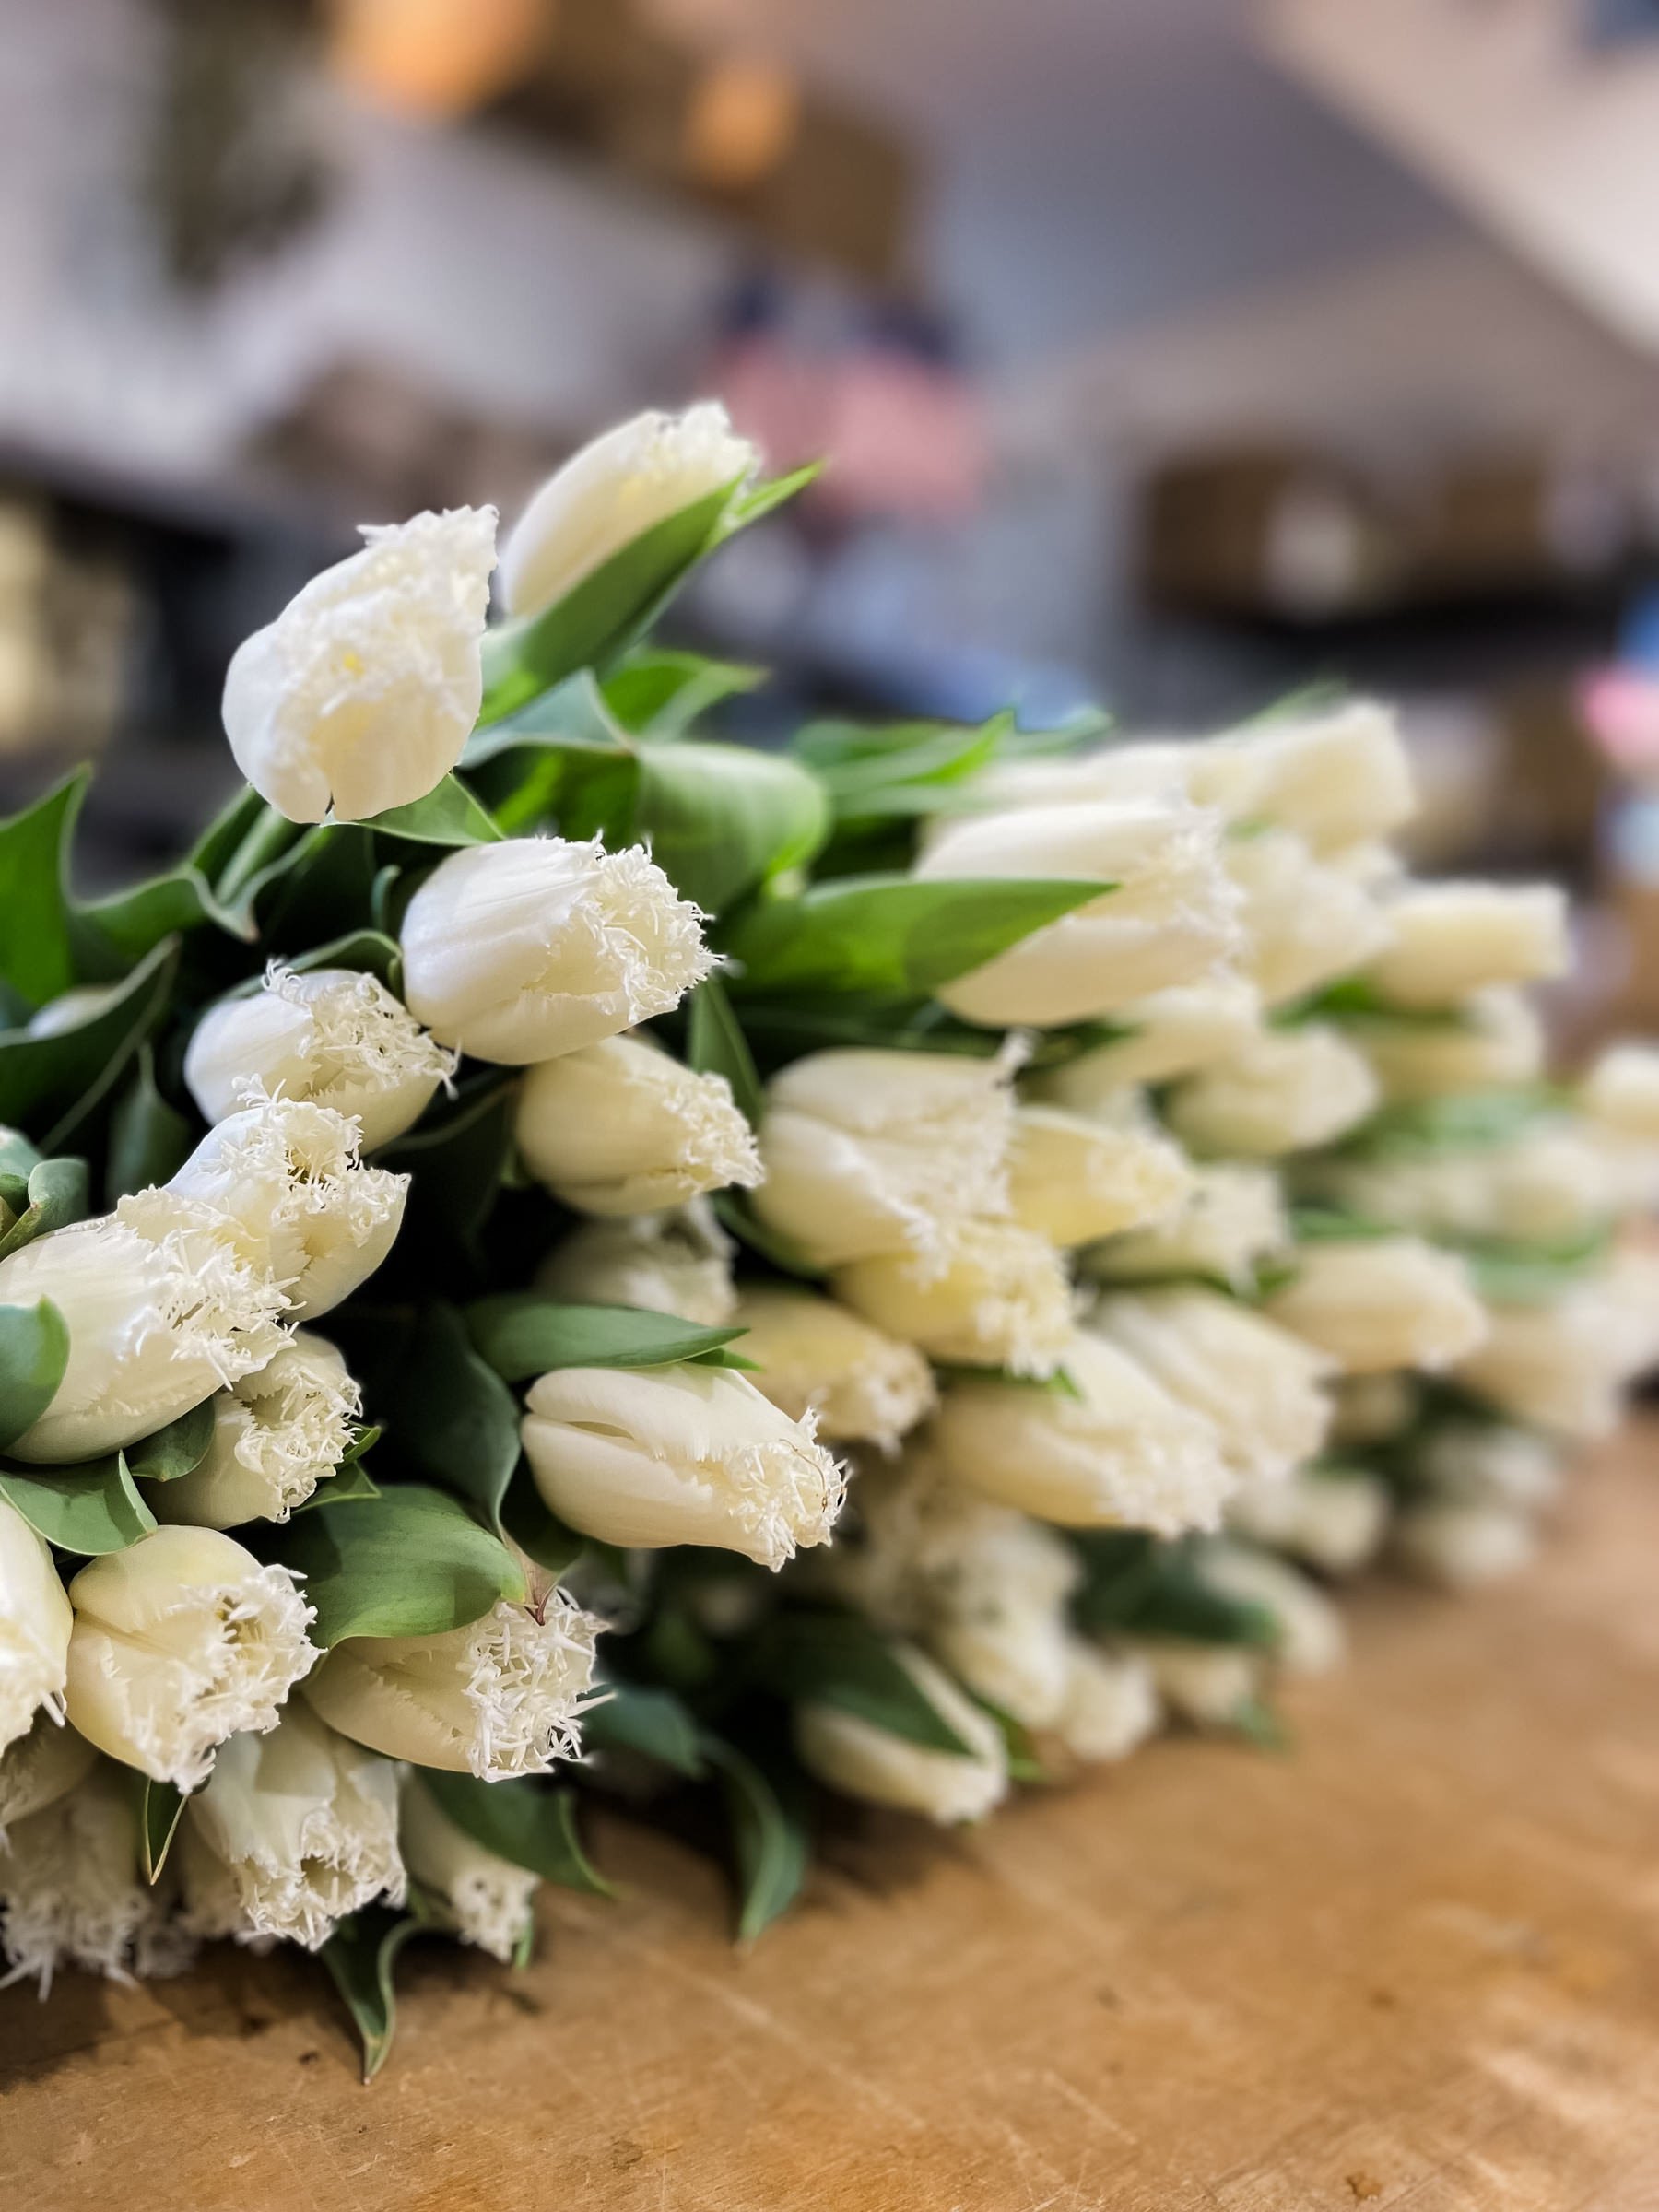 Diddle-And-Zen-Vermont-Wedding-Floral-Designer-Arrangement-Bouquet-Diddle-and-Zen-Vermont-Florist-Tulip-Subscription02.jpg